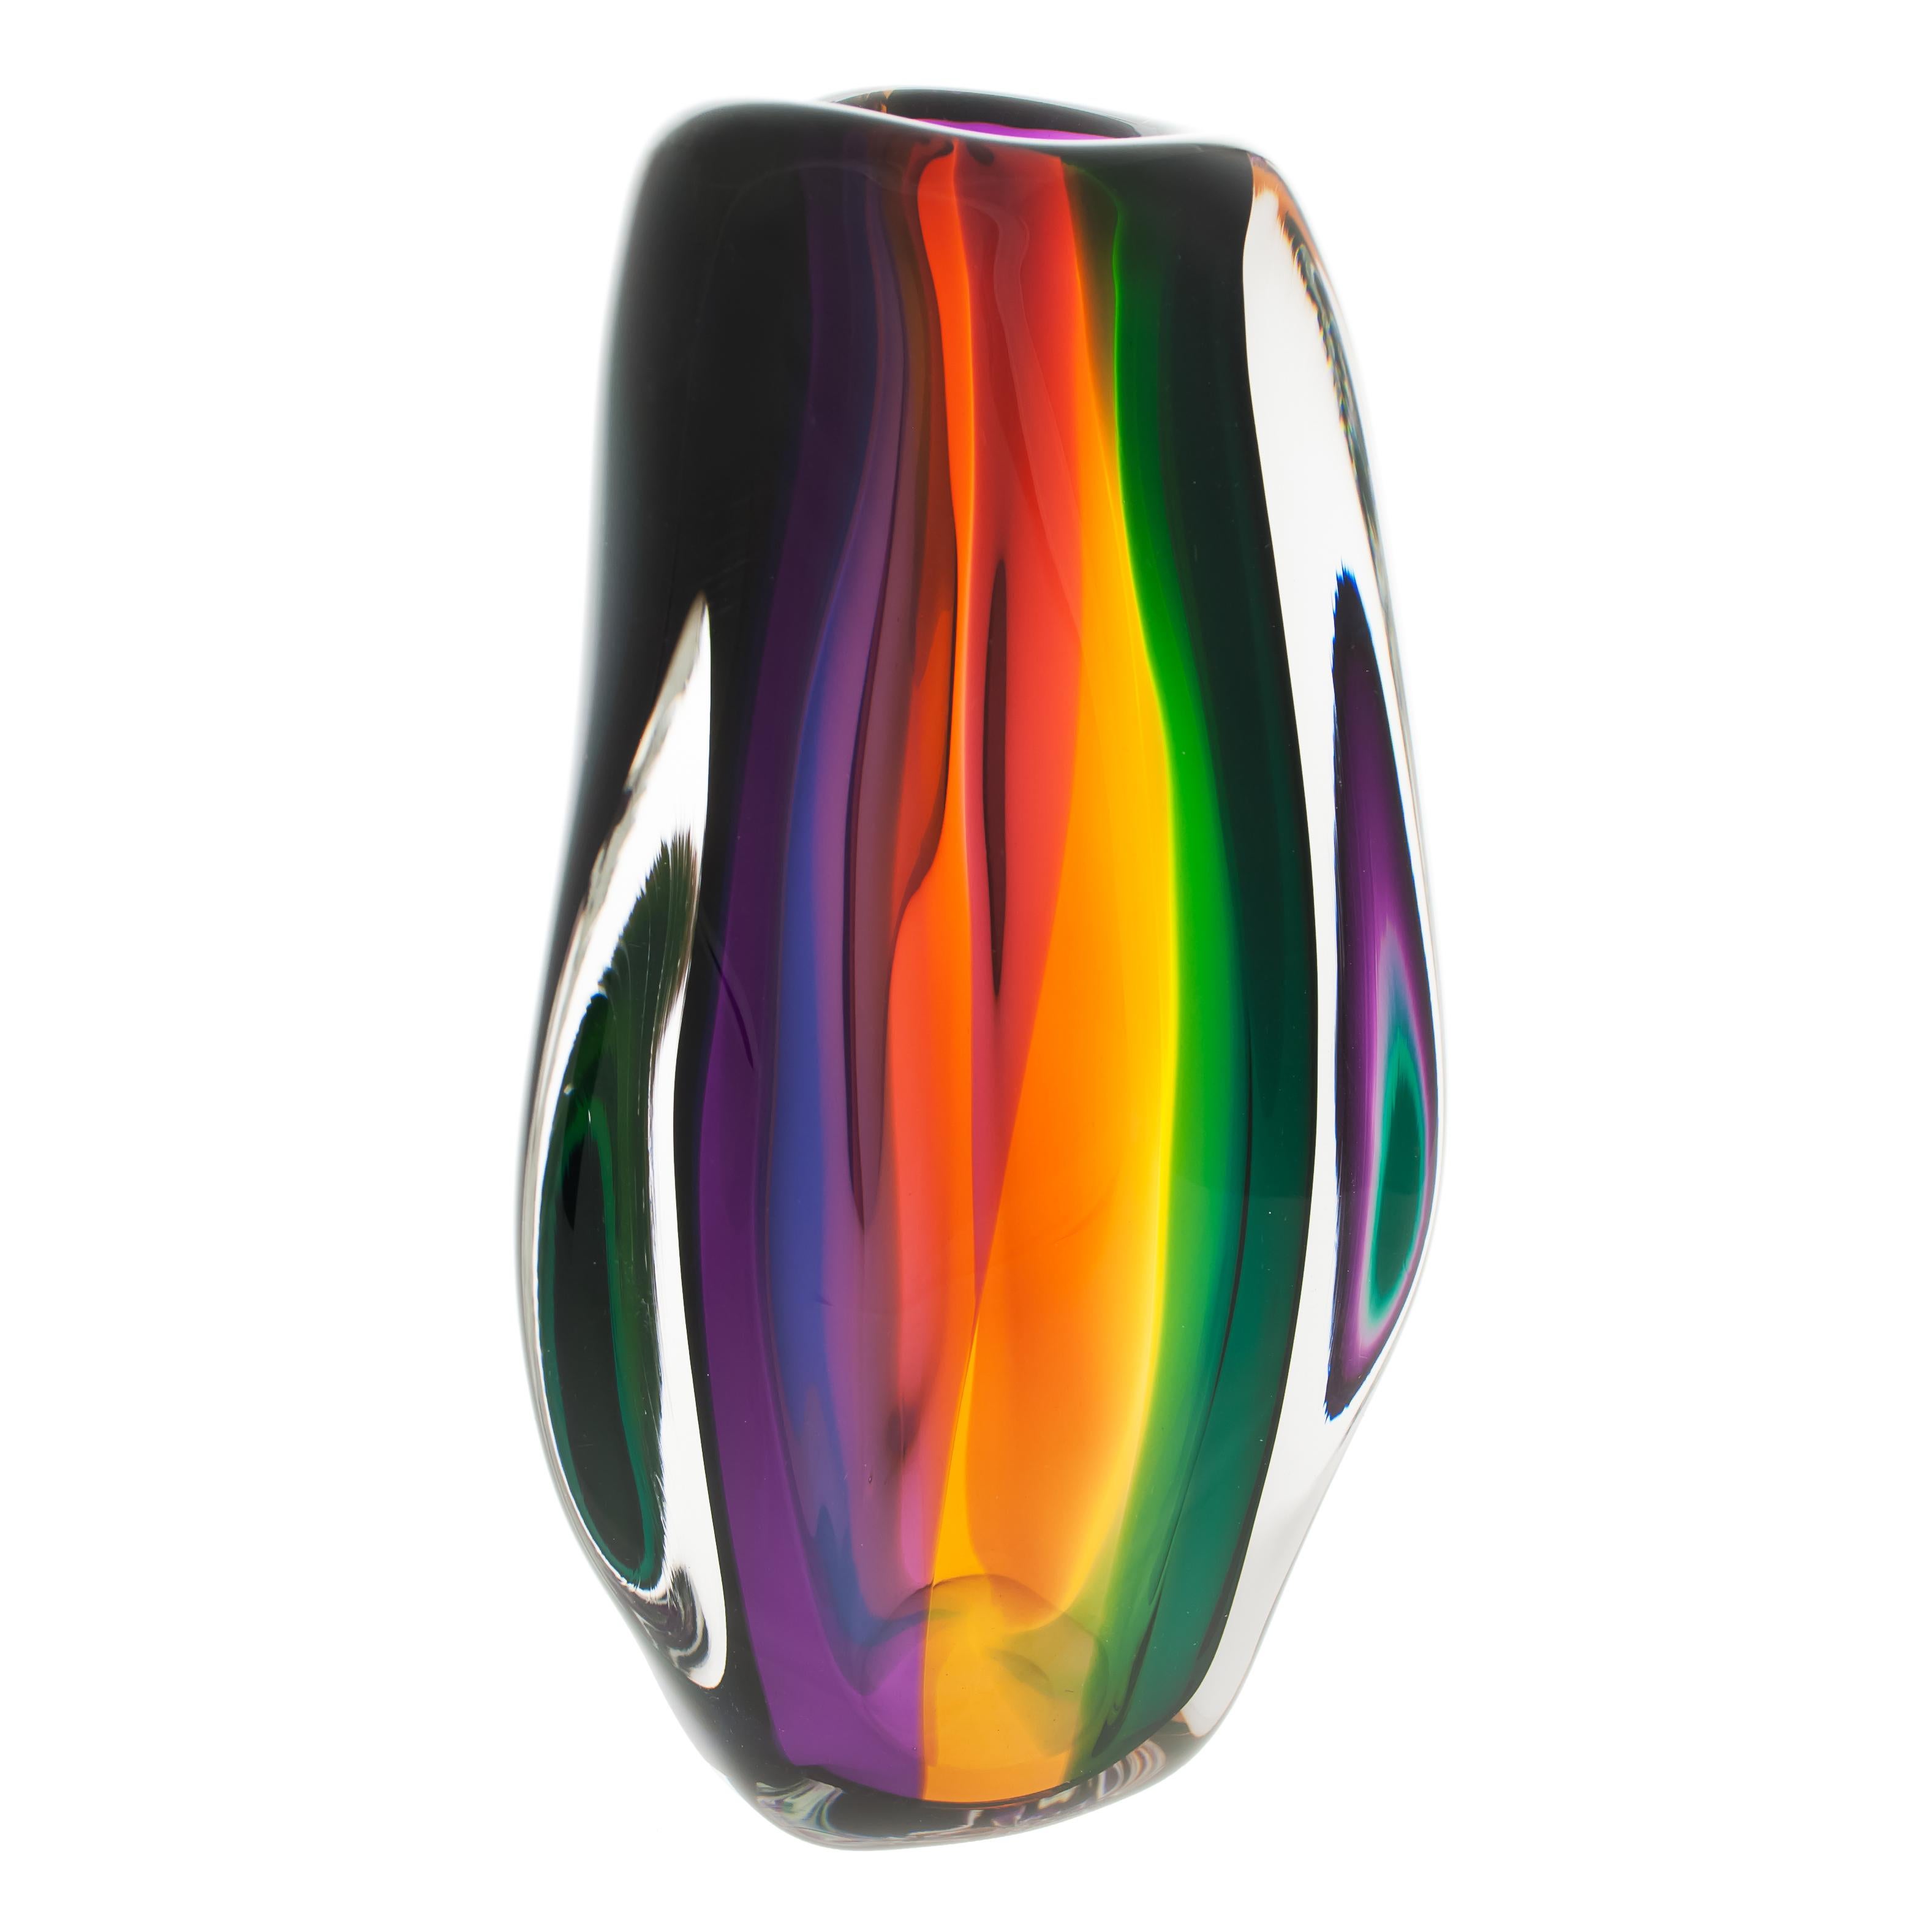 Art Glass Vase, Love Floppy Triangle by Siemon & Salazar - Made to Order